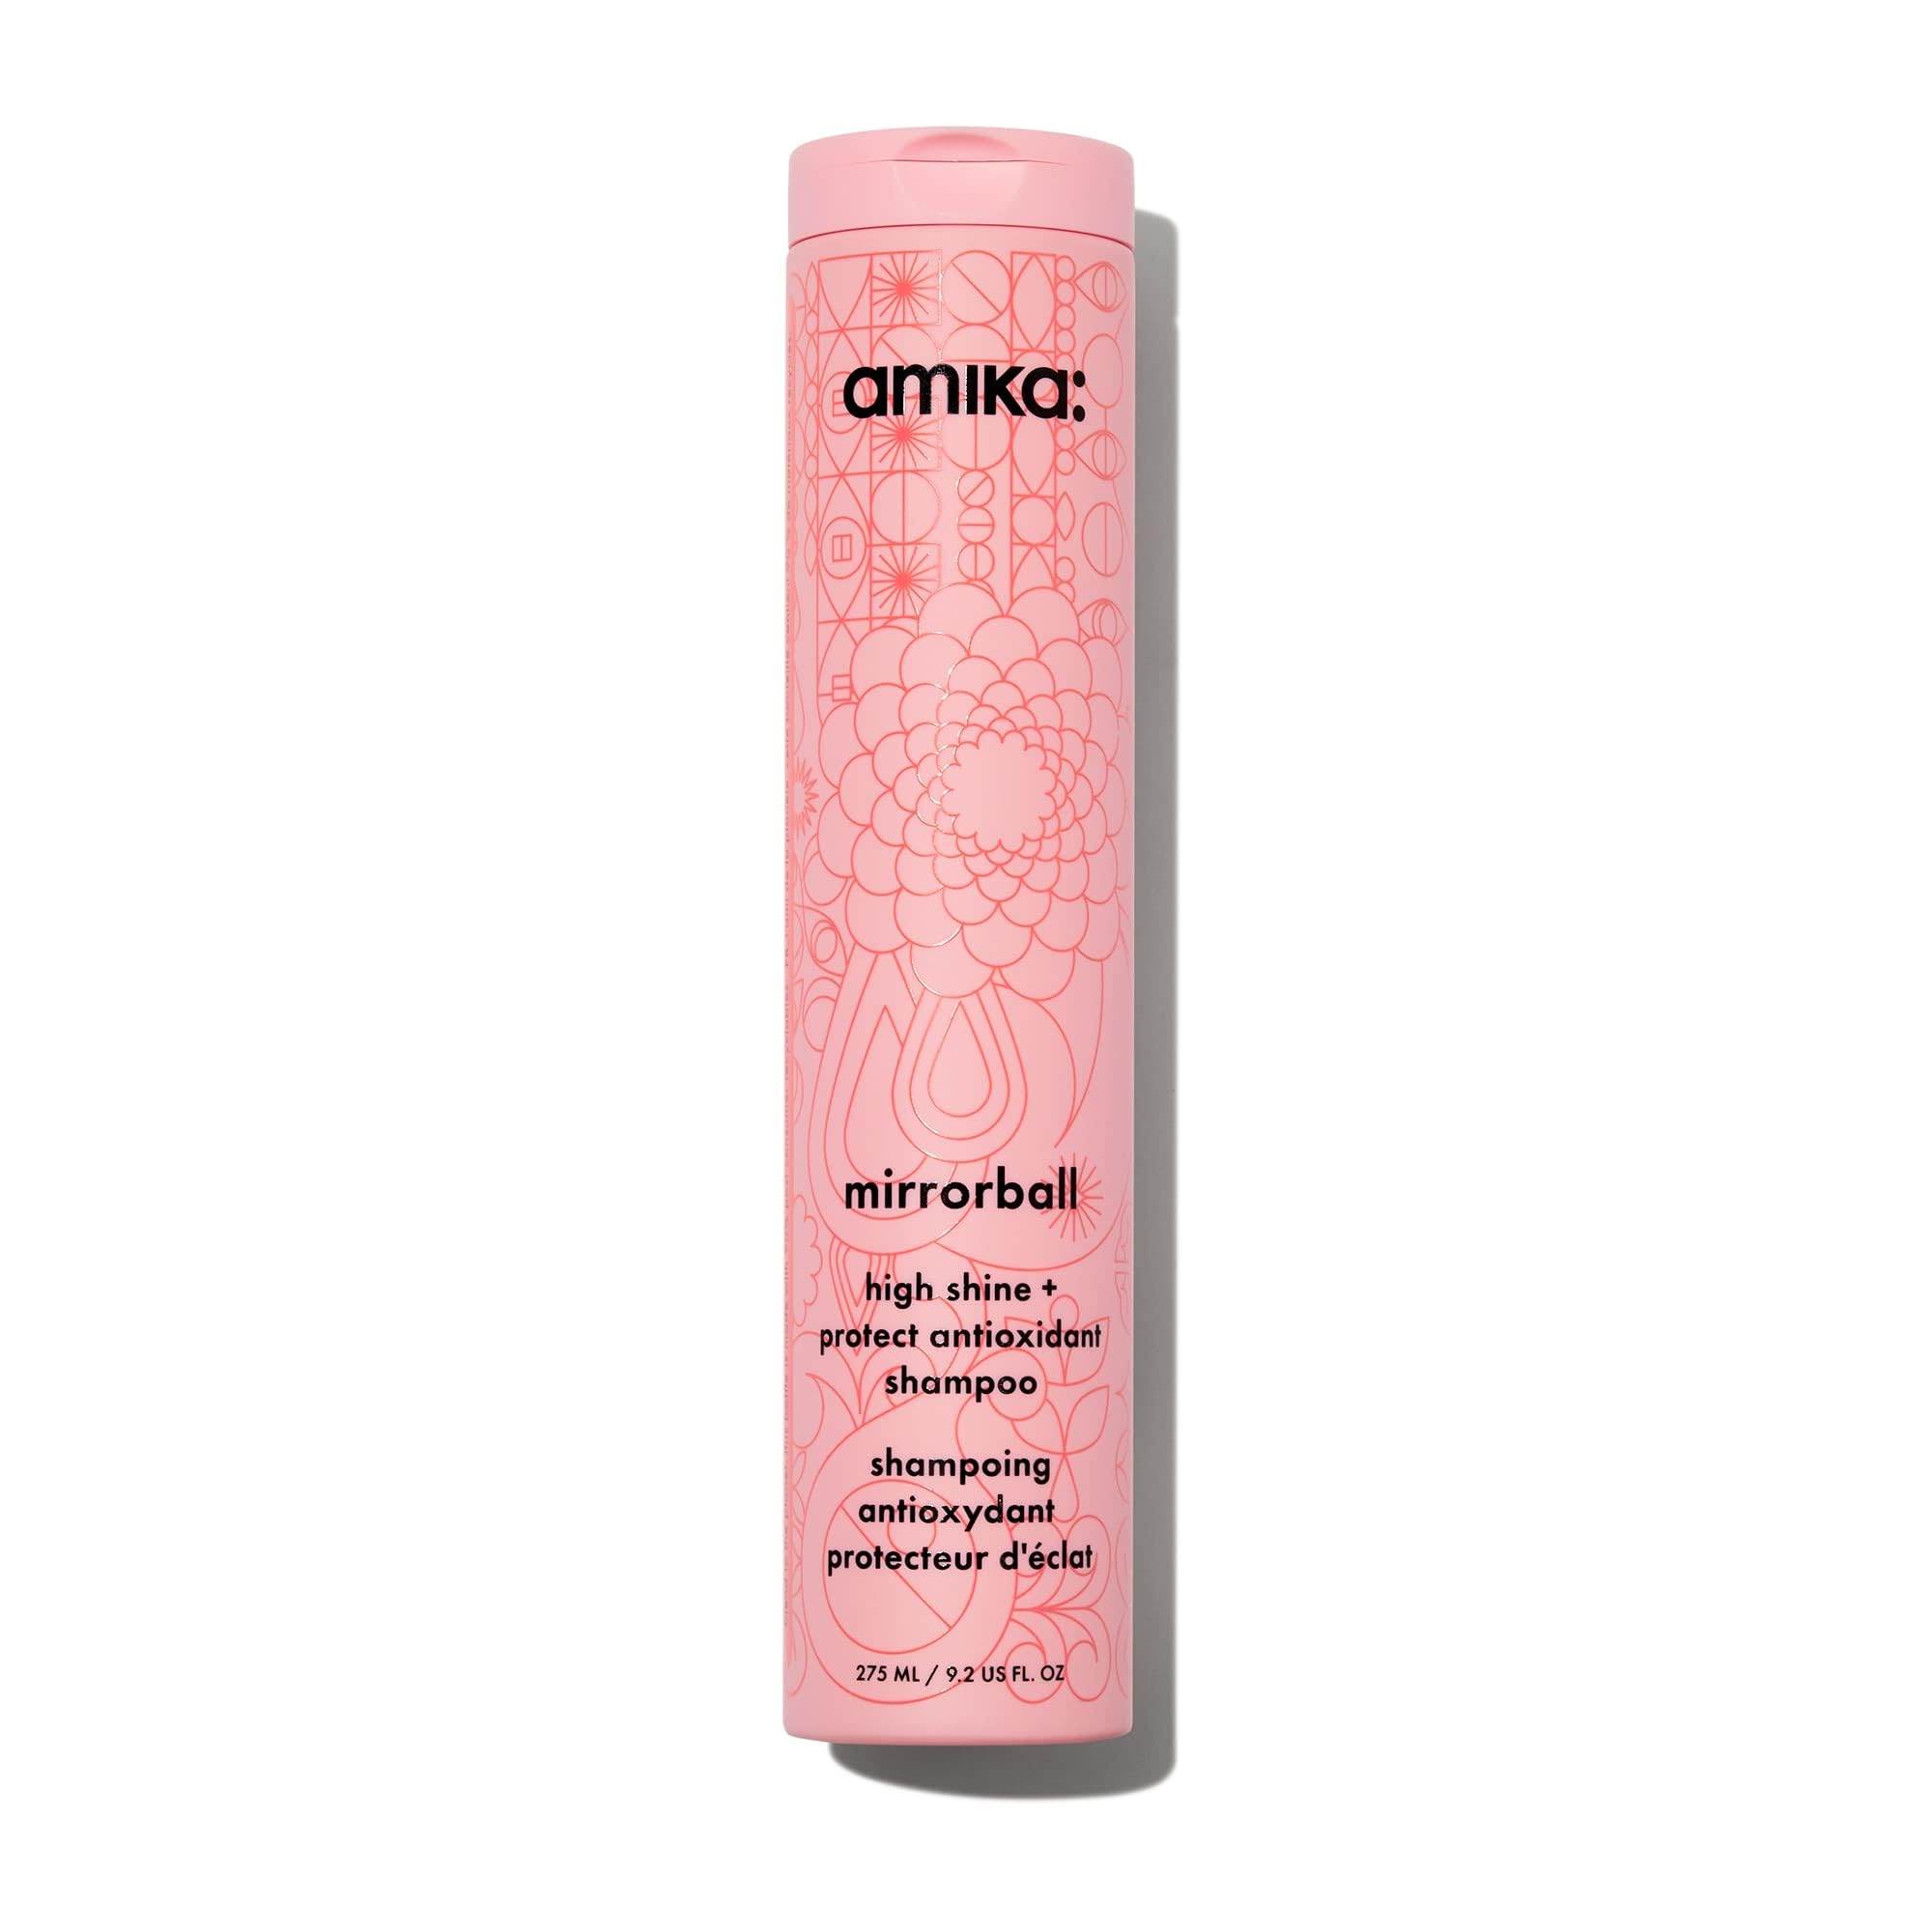 amika mirrorball high shine + protect antioxidant shampoo